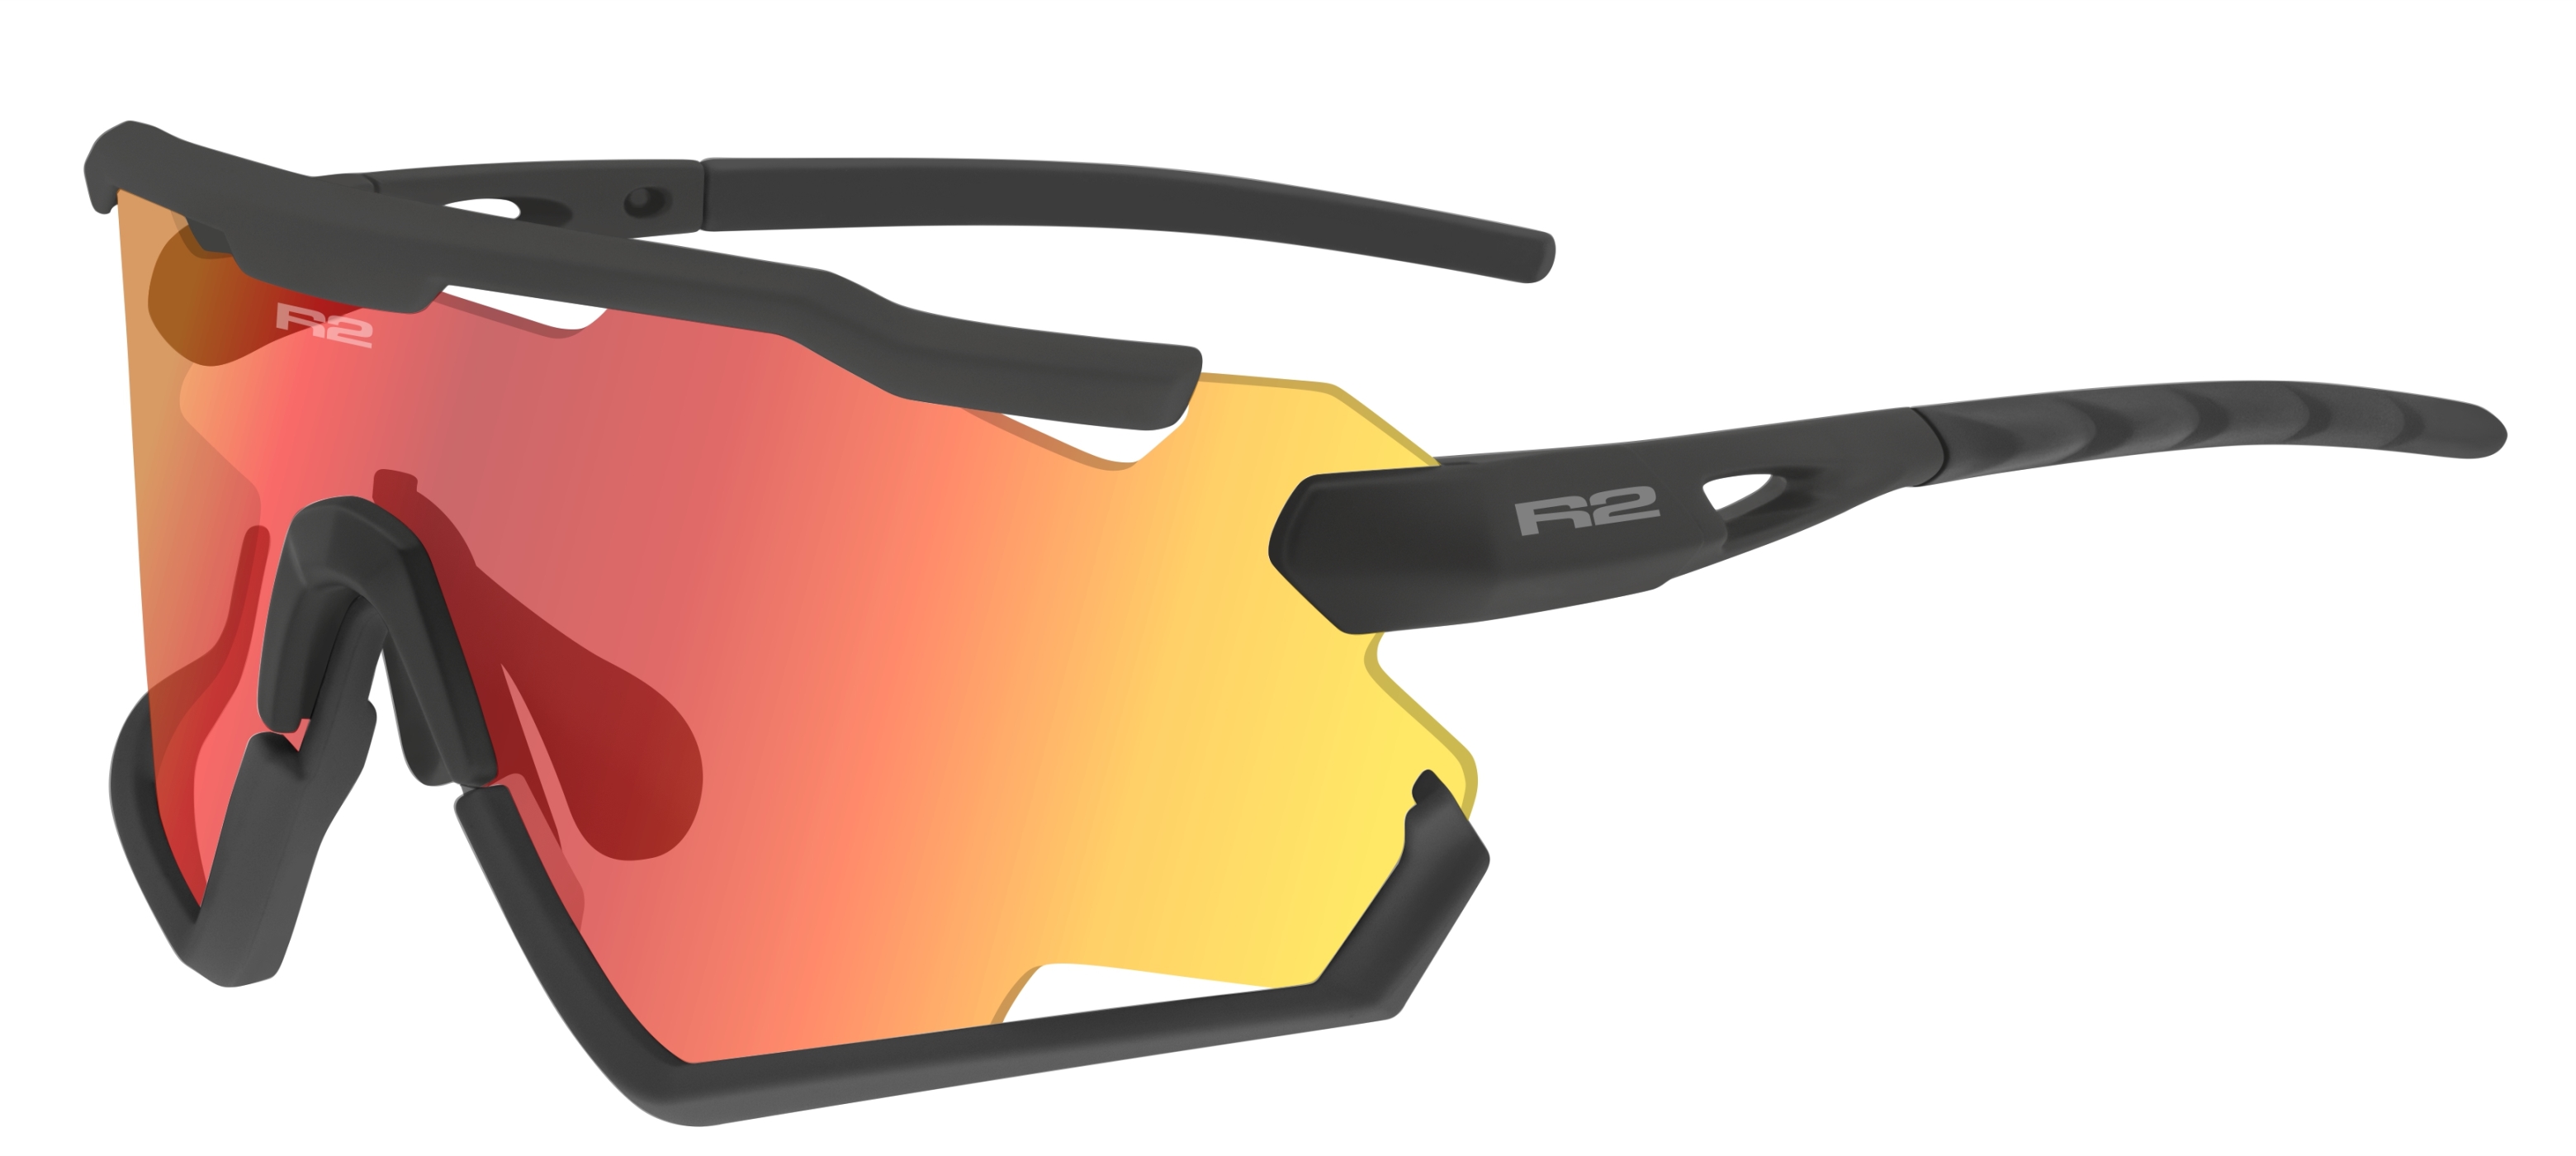 Photochromatic sunglasses  R2 DIABLO AT106J standard